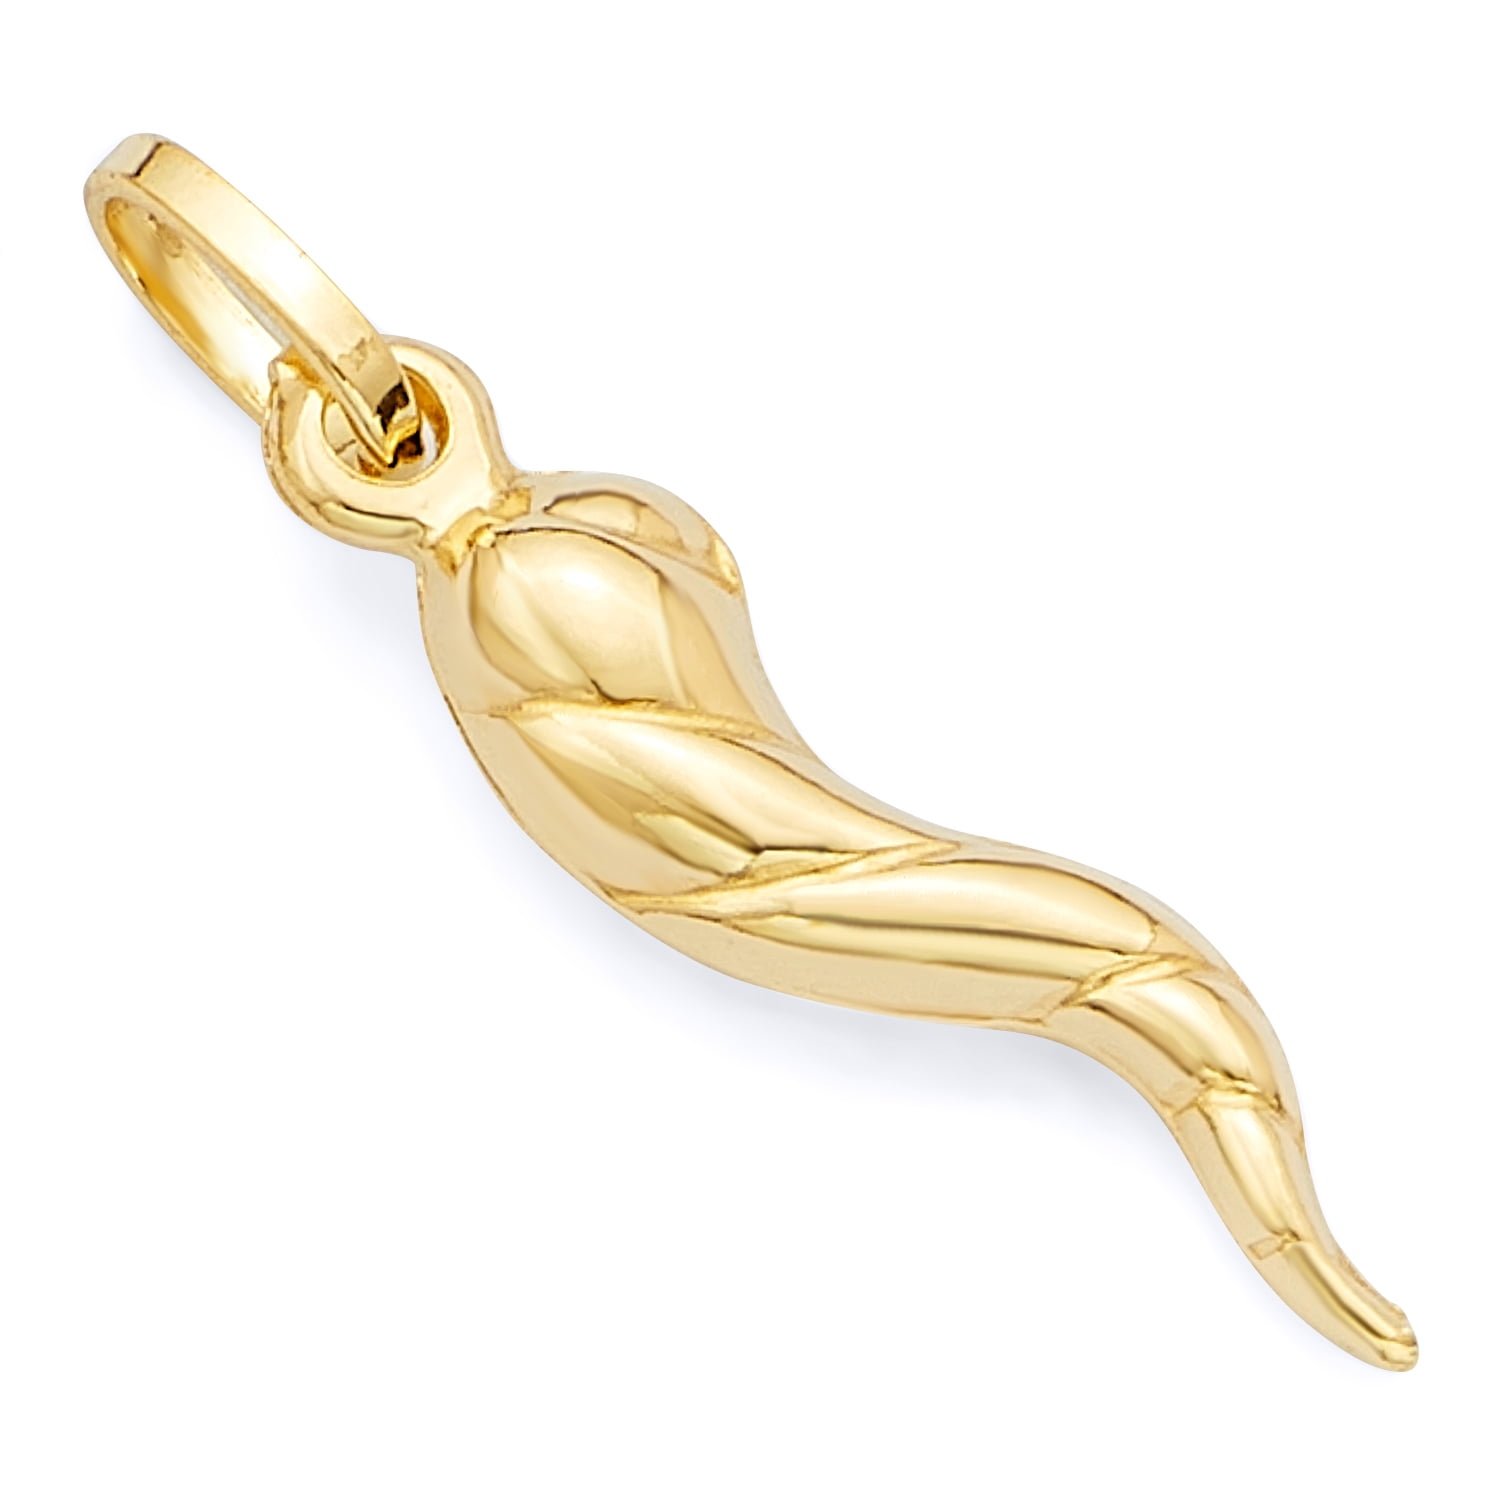 Wellingsale 14K Yellow Gold Polished Diamond Cut Twisted Cornicello Italian Horn Charm Pendant